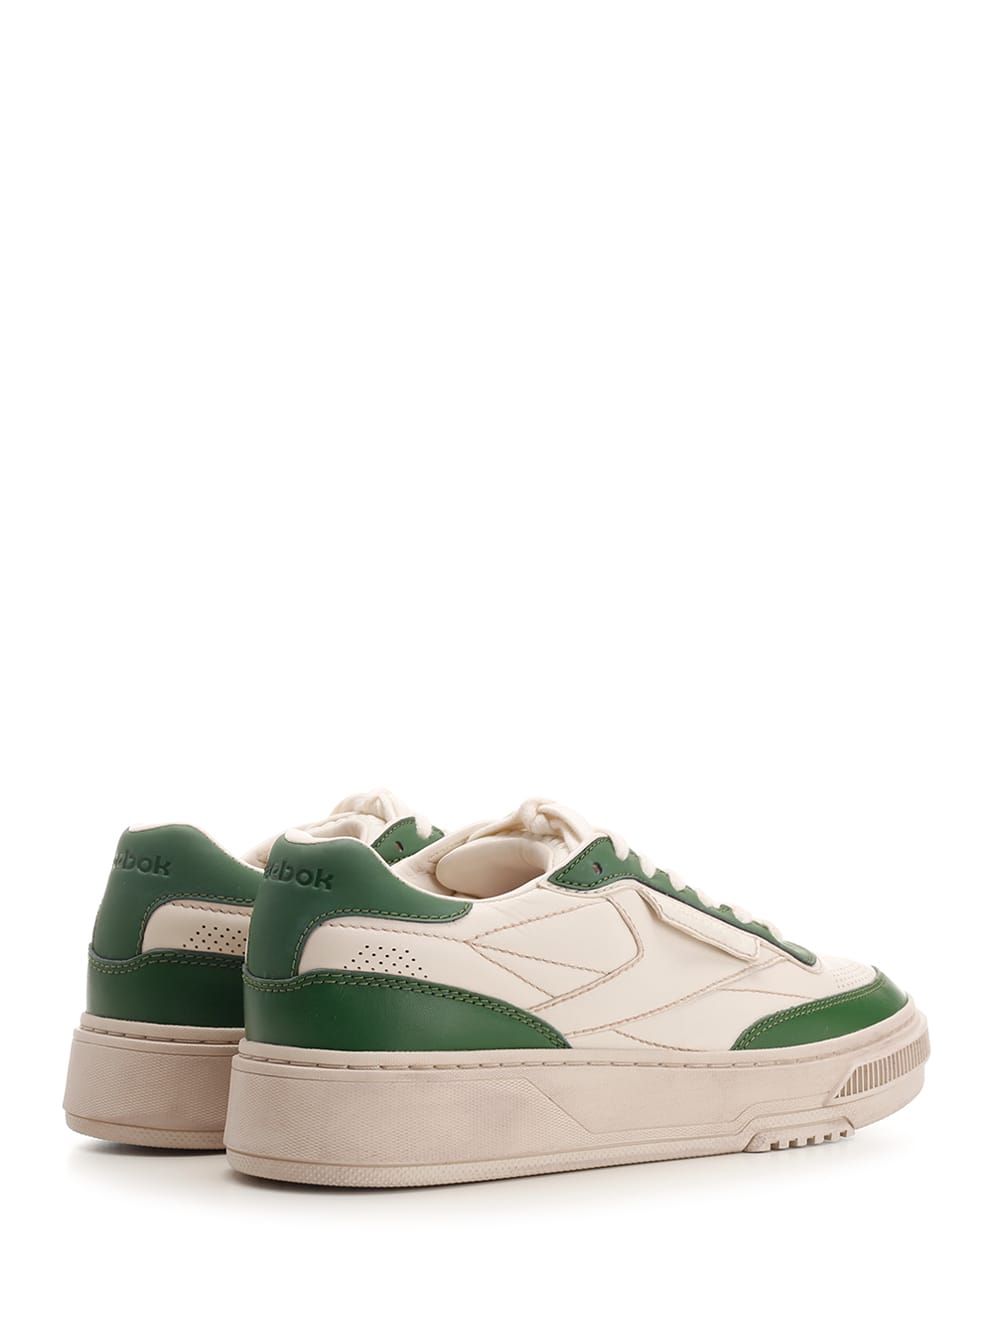 Shop Reebok Club C Ltd Sneakers Vintage Green